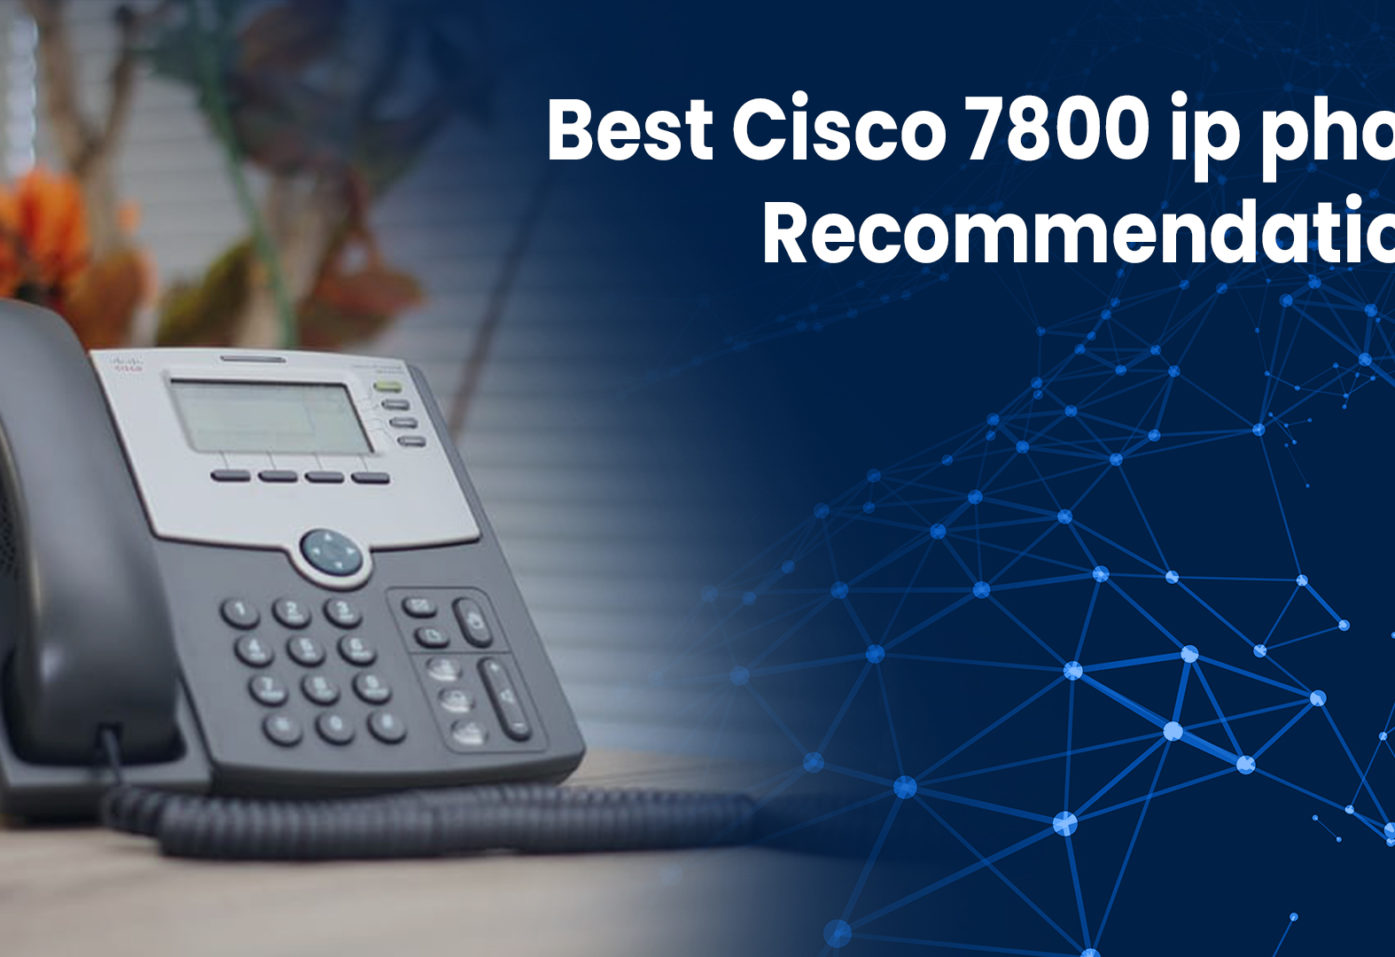 Best Cisco 7800 ip phone